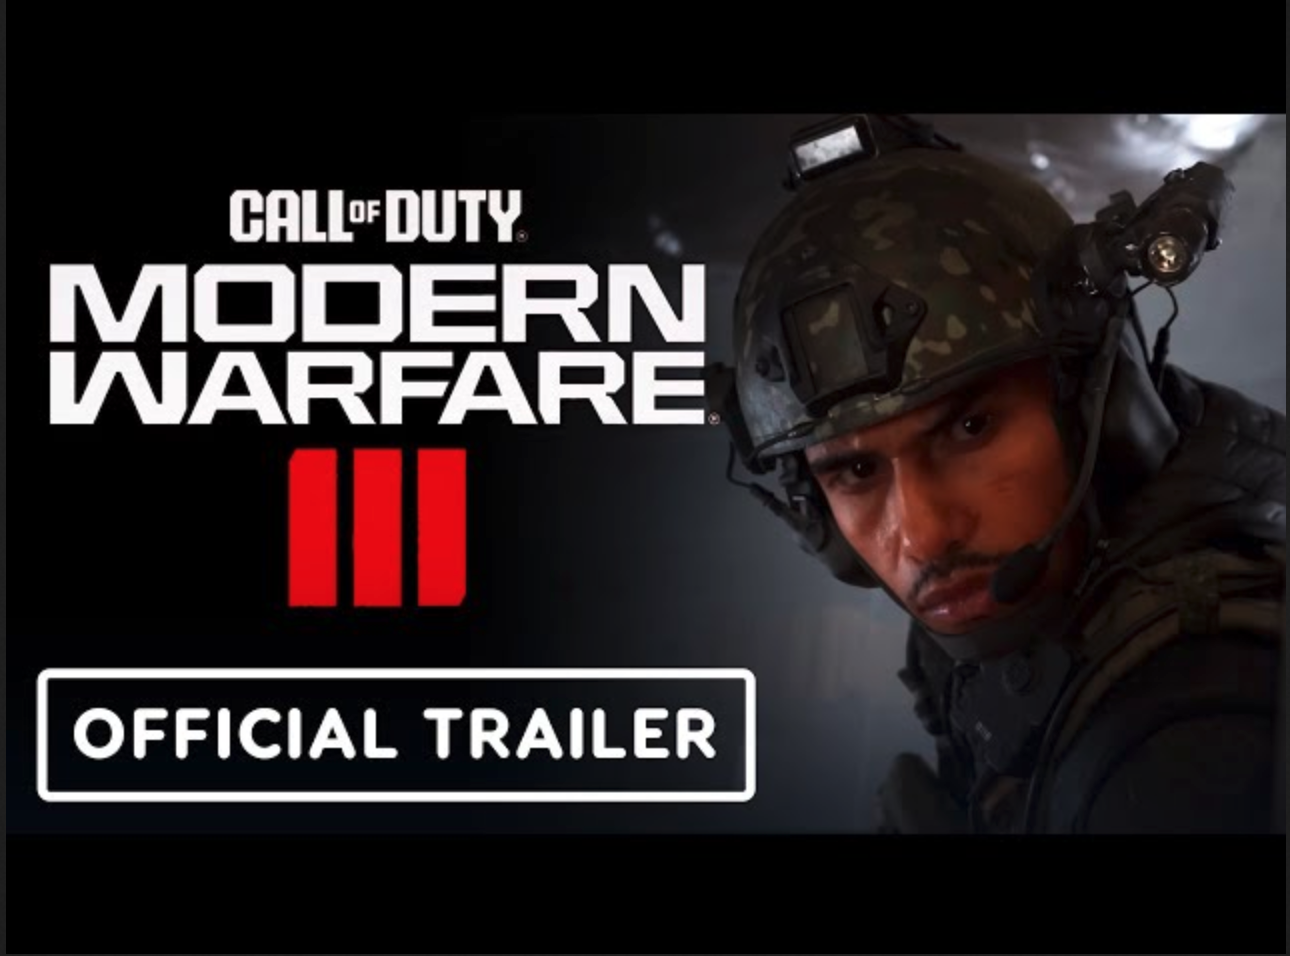 Call of Duty Modern Warfare 2 PS4 Gameplay FULL GAME